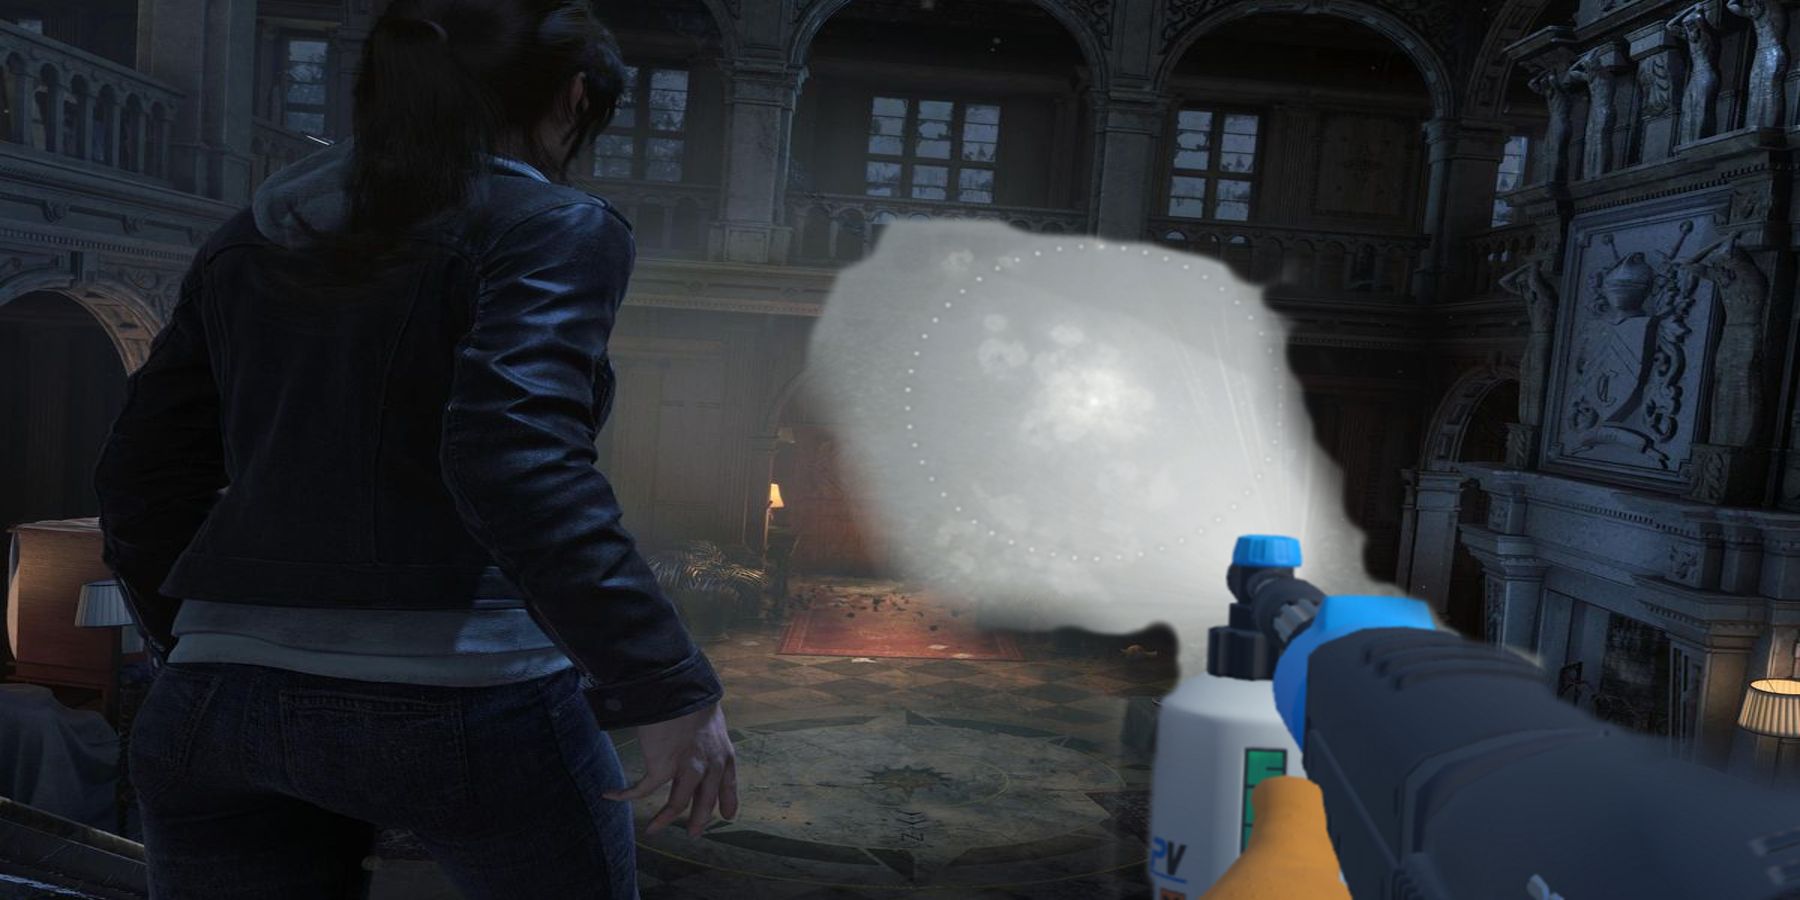 PowerWash Simulator gets free Tomb Raider DLC on January 31